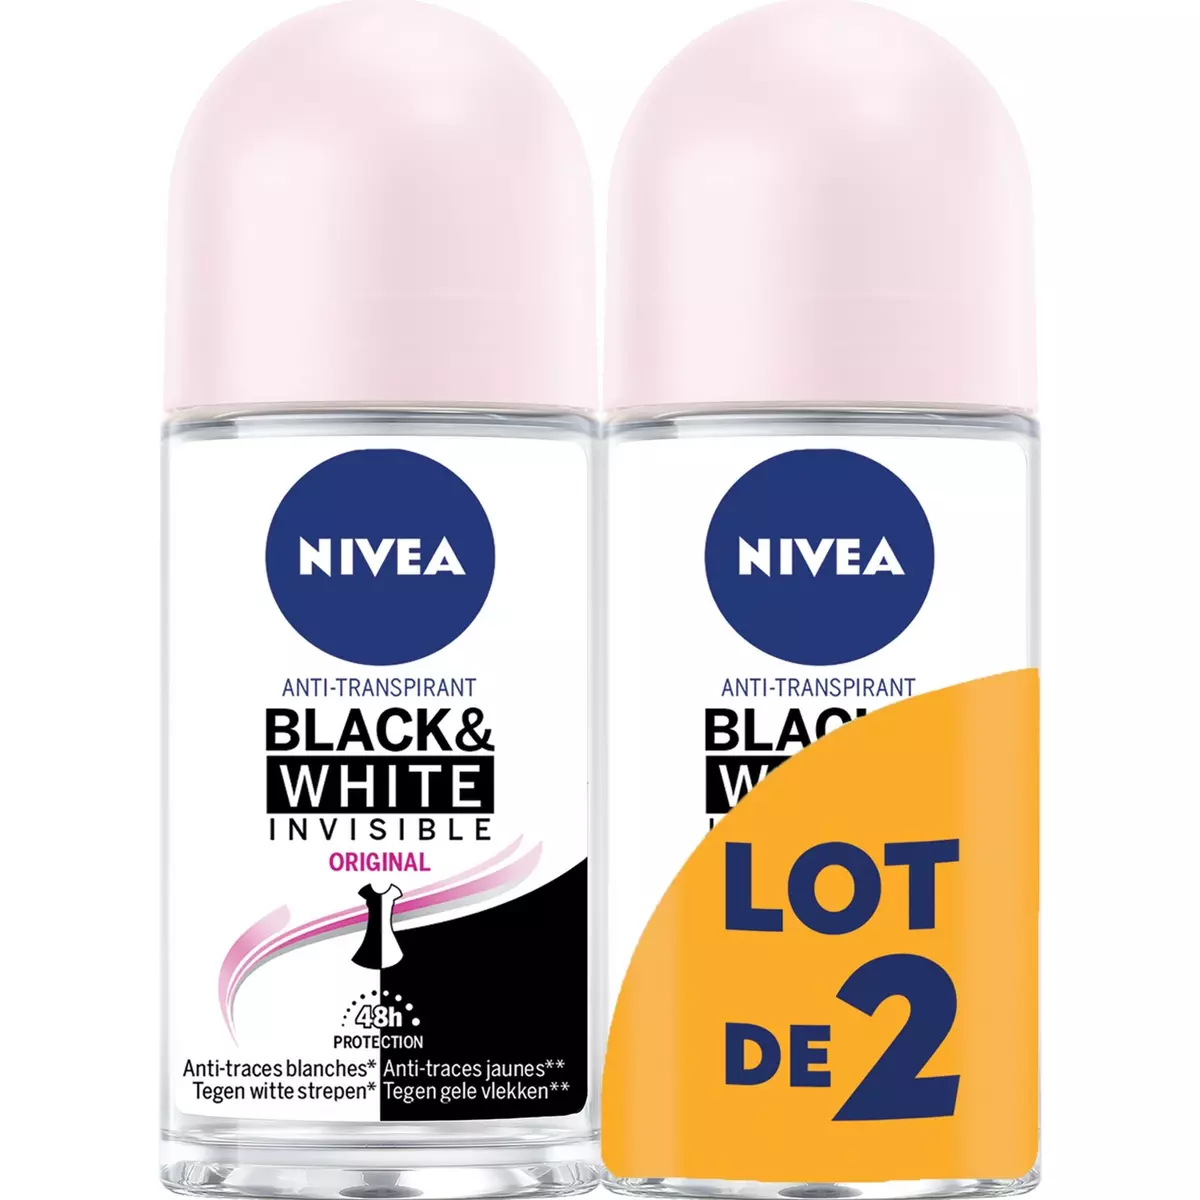 NIVEA Black & white déodorant bille invisible femme anti-transpirant 48h 2x50ml